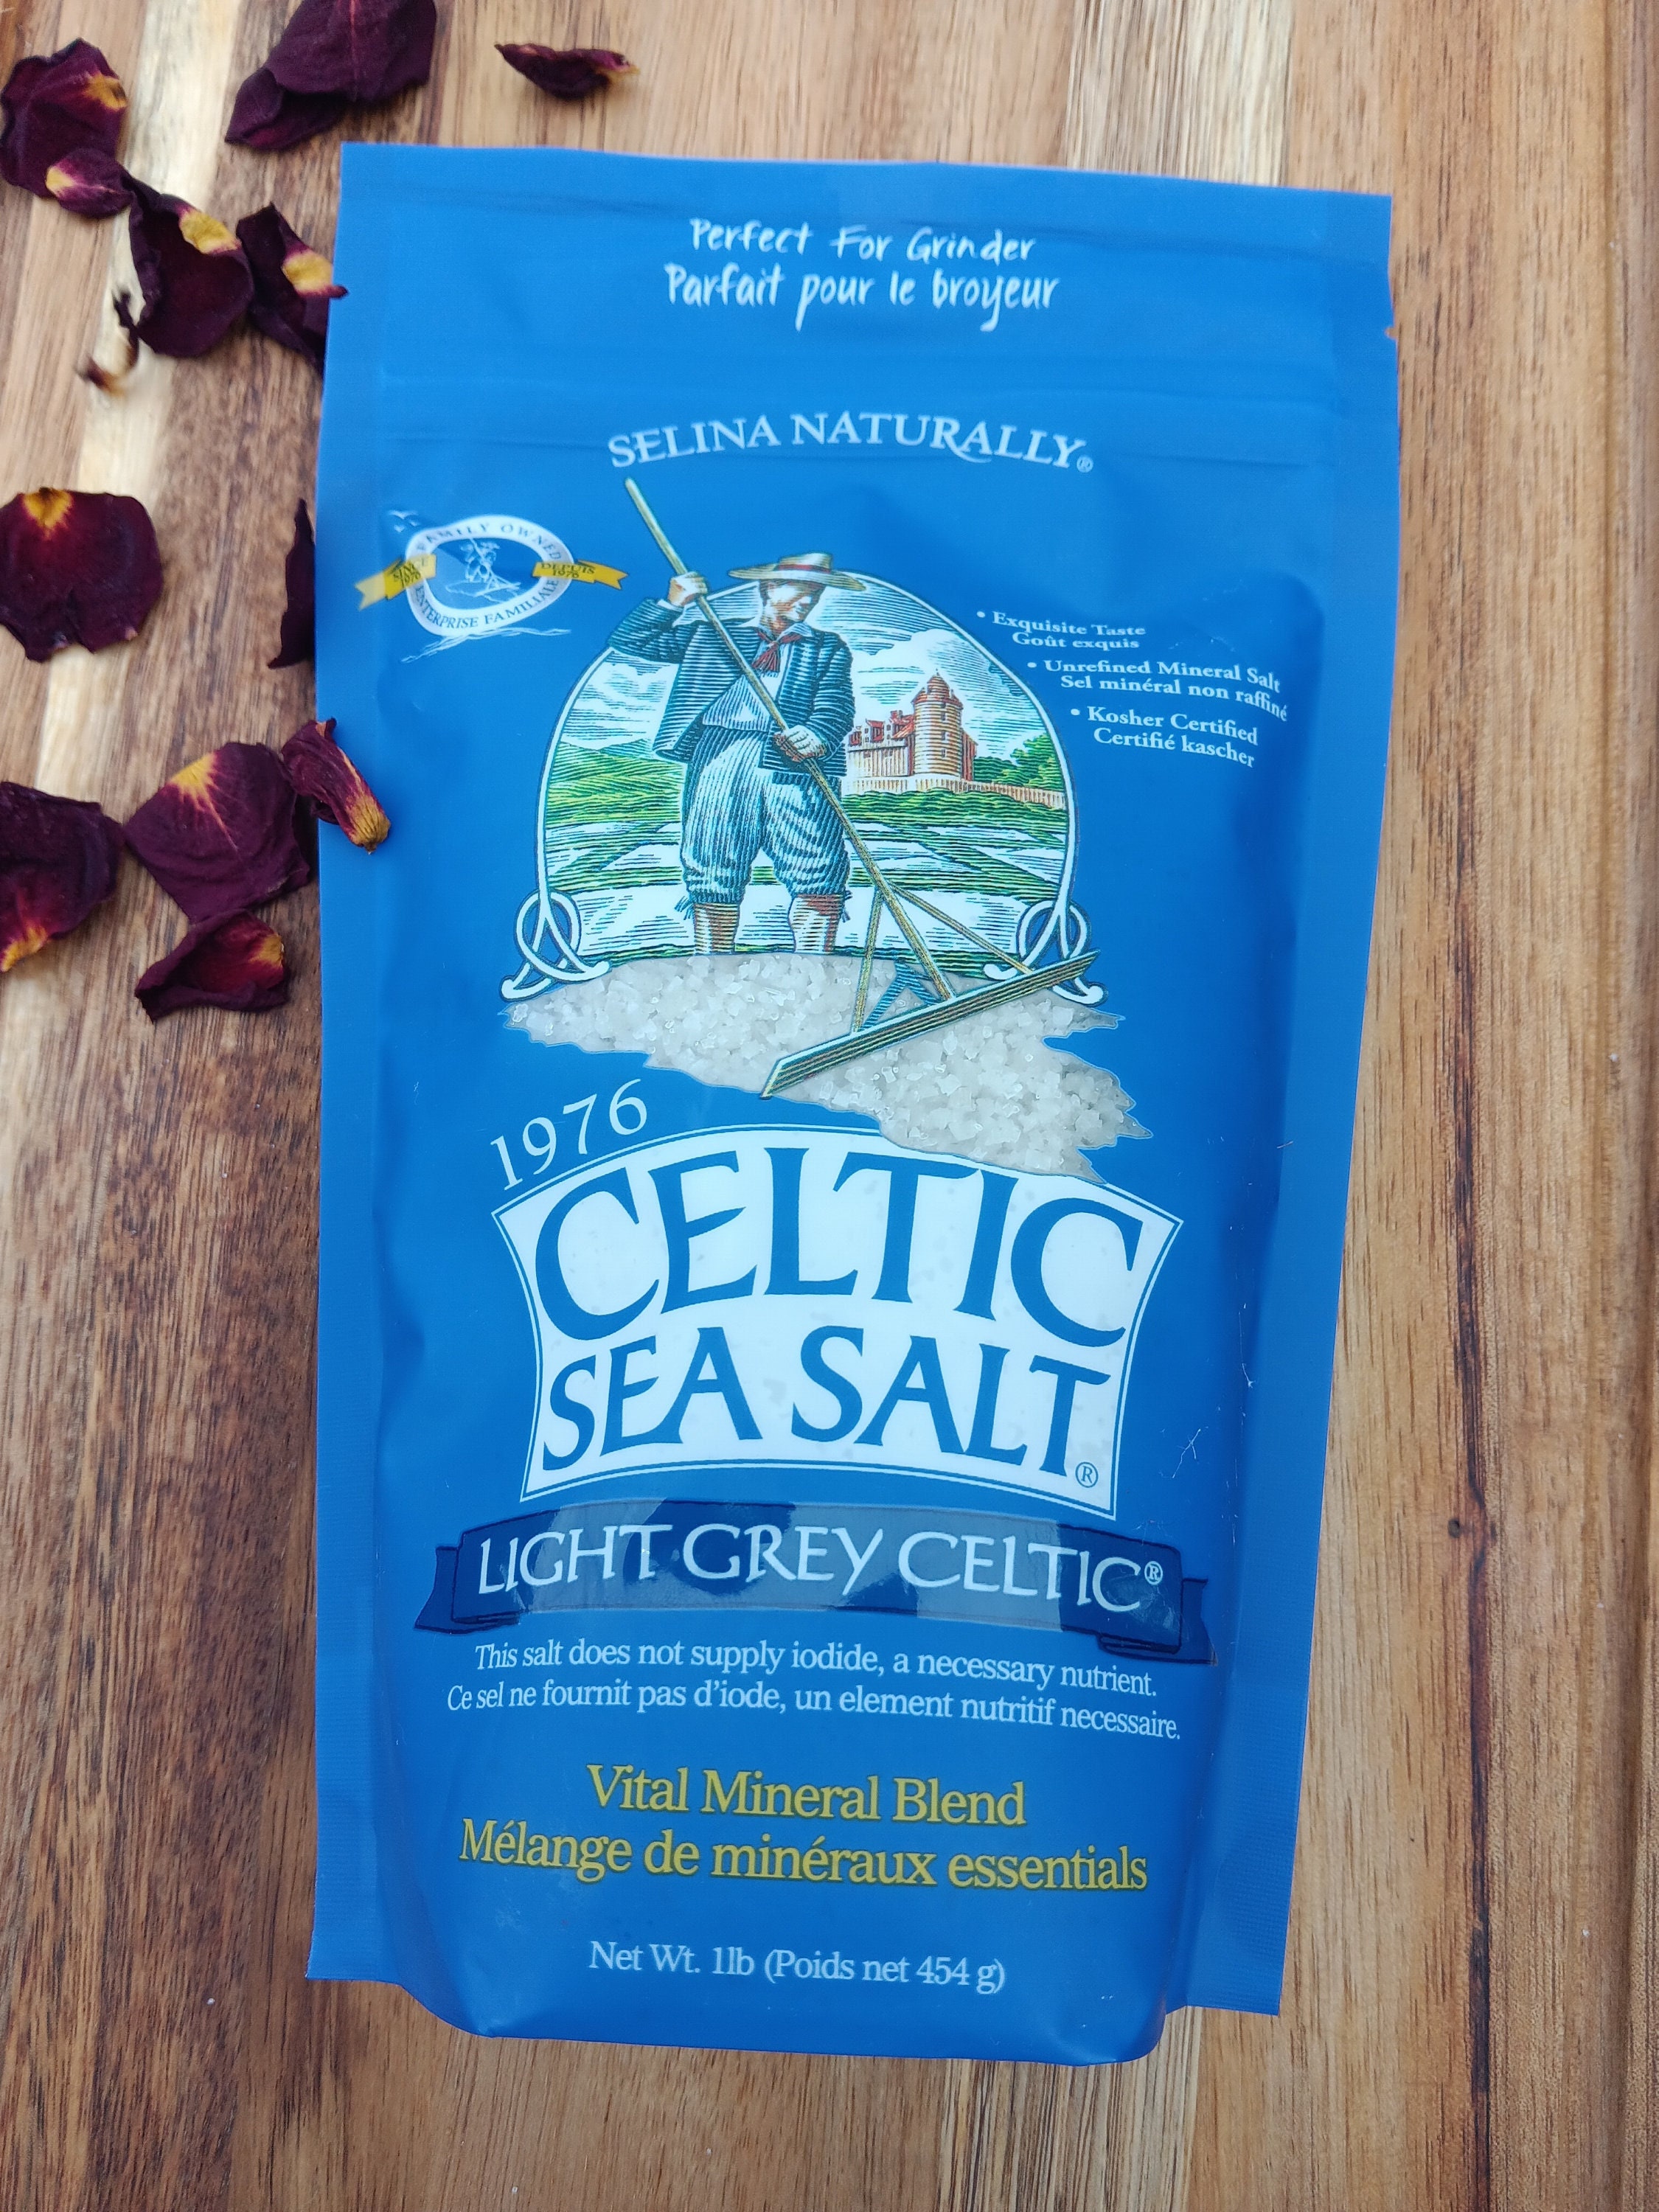 Selina Celtic Sea Salt Fine Ground 227g - Heal Health Warehouse